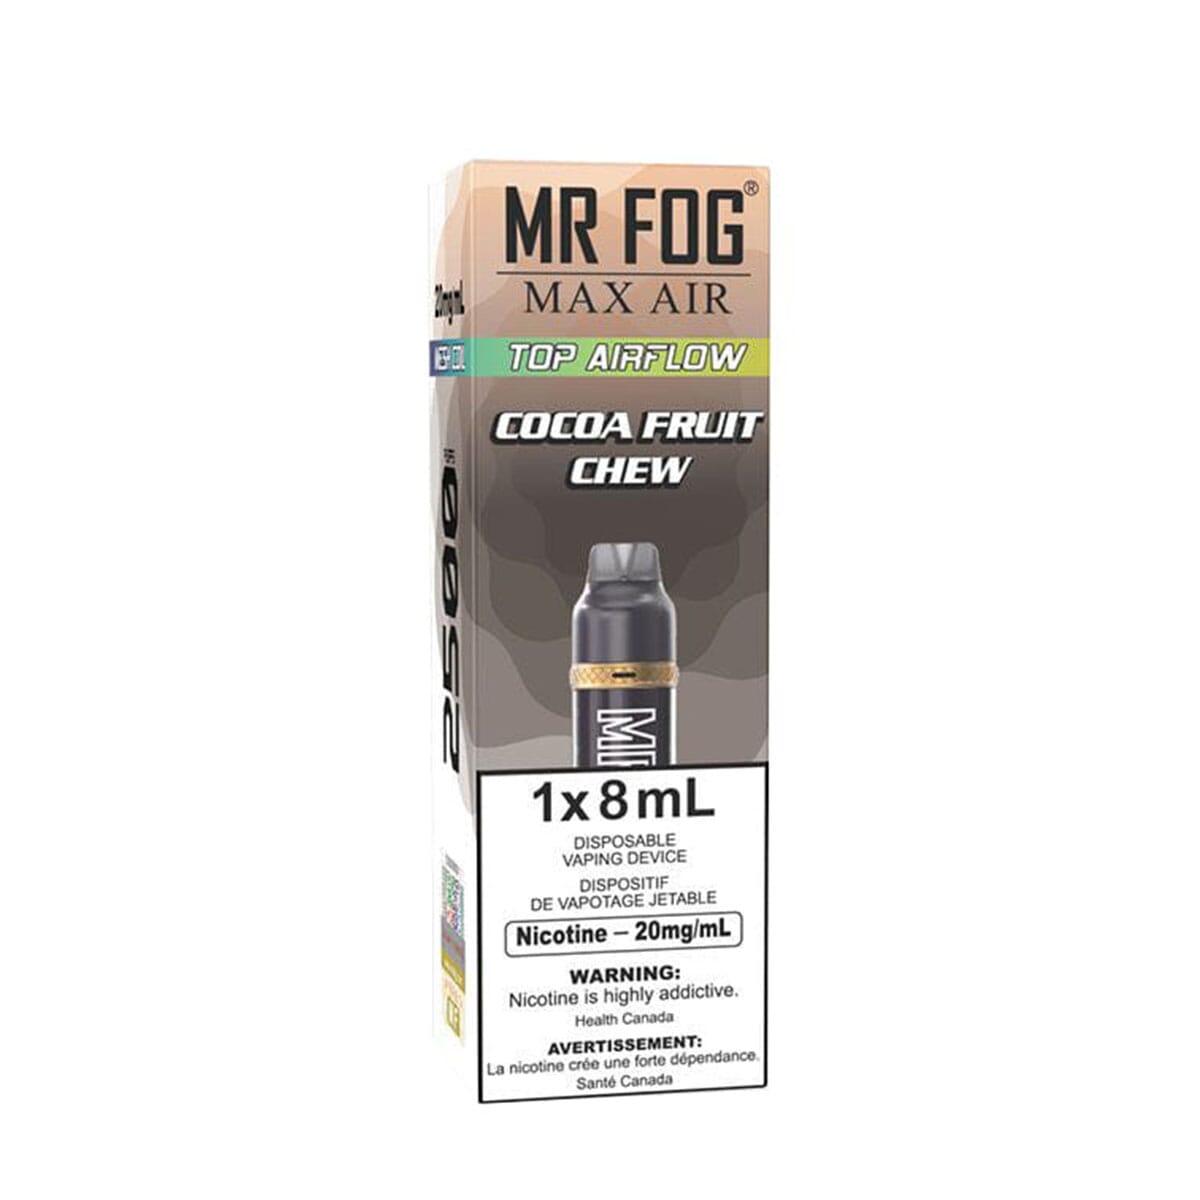 Mr. Fog Max Air Cocoa Fruit Chew Disposable Vape Pen Disposable Mr. Fog Max Air 